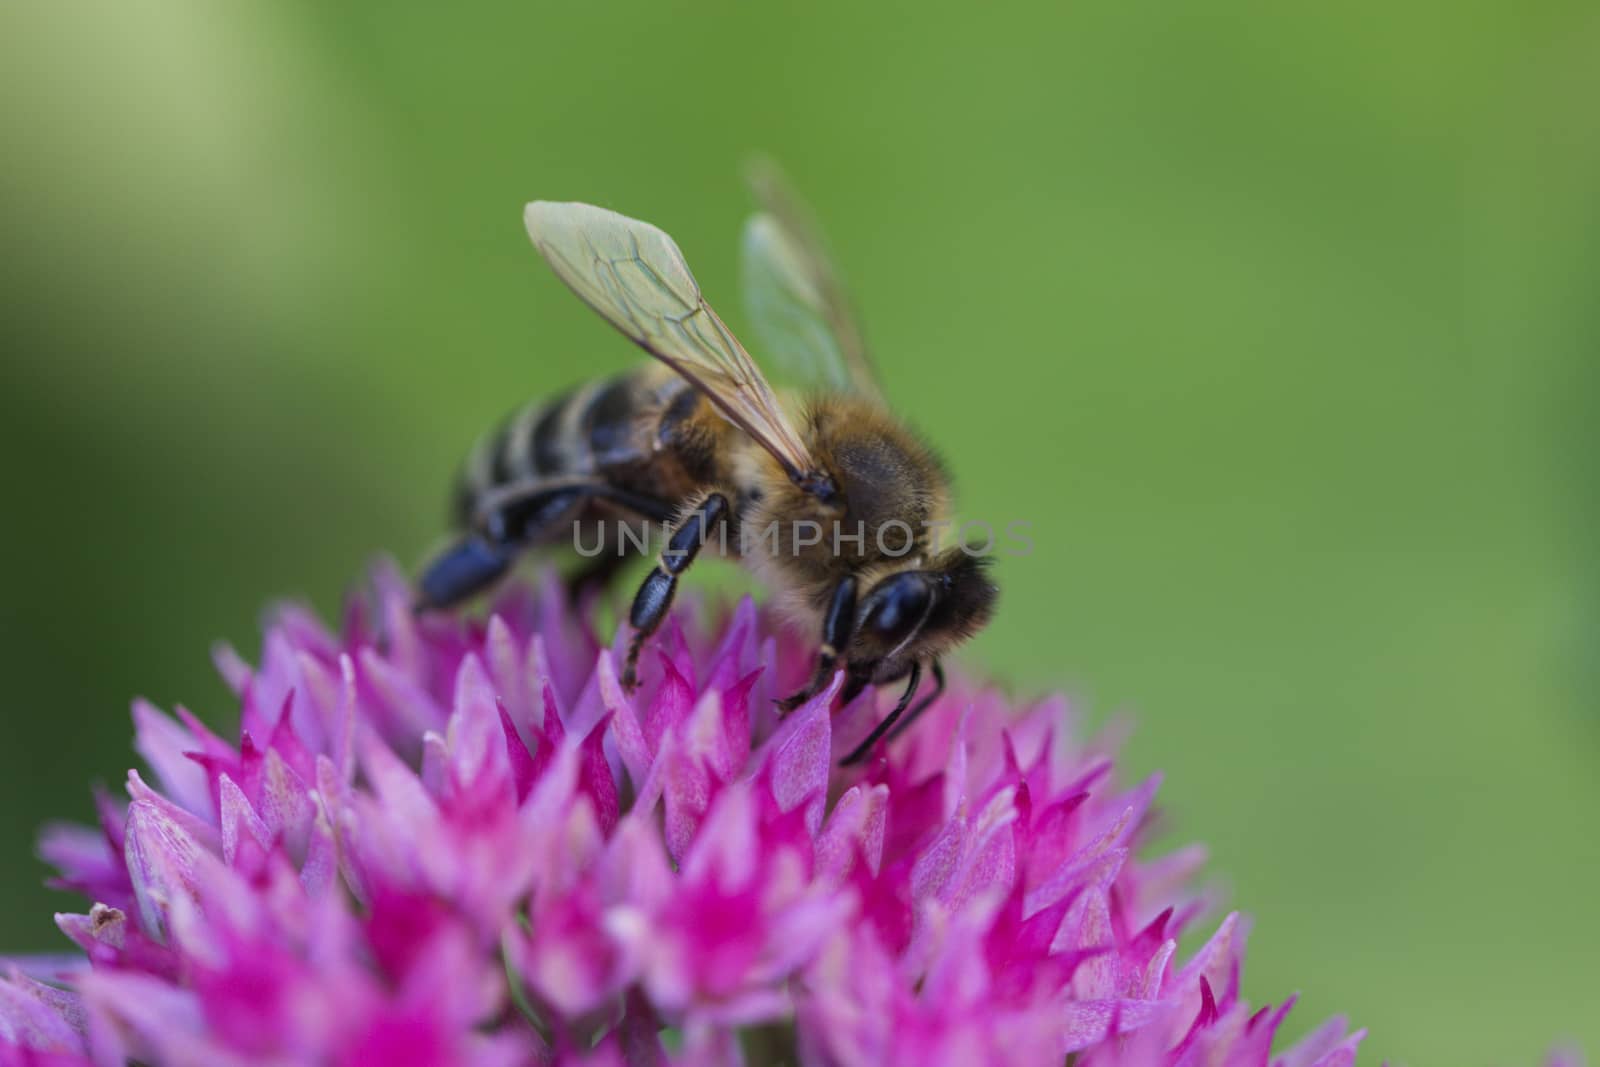 Bee on a flower of the Sedum (Stonecrop) in blossom. Macro of honey bee (Apis) feeding on pink (rose) flower